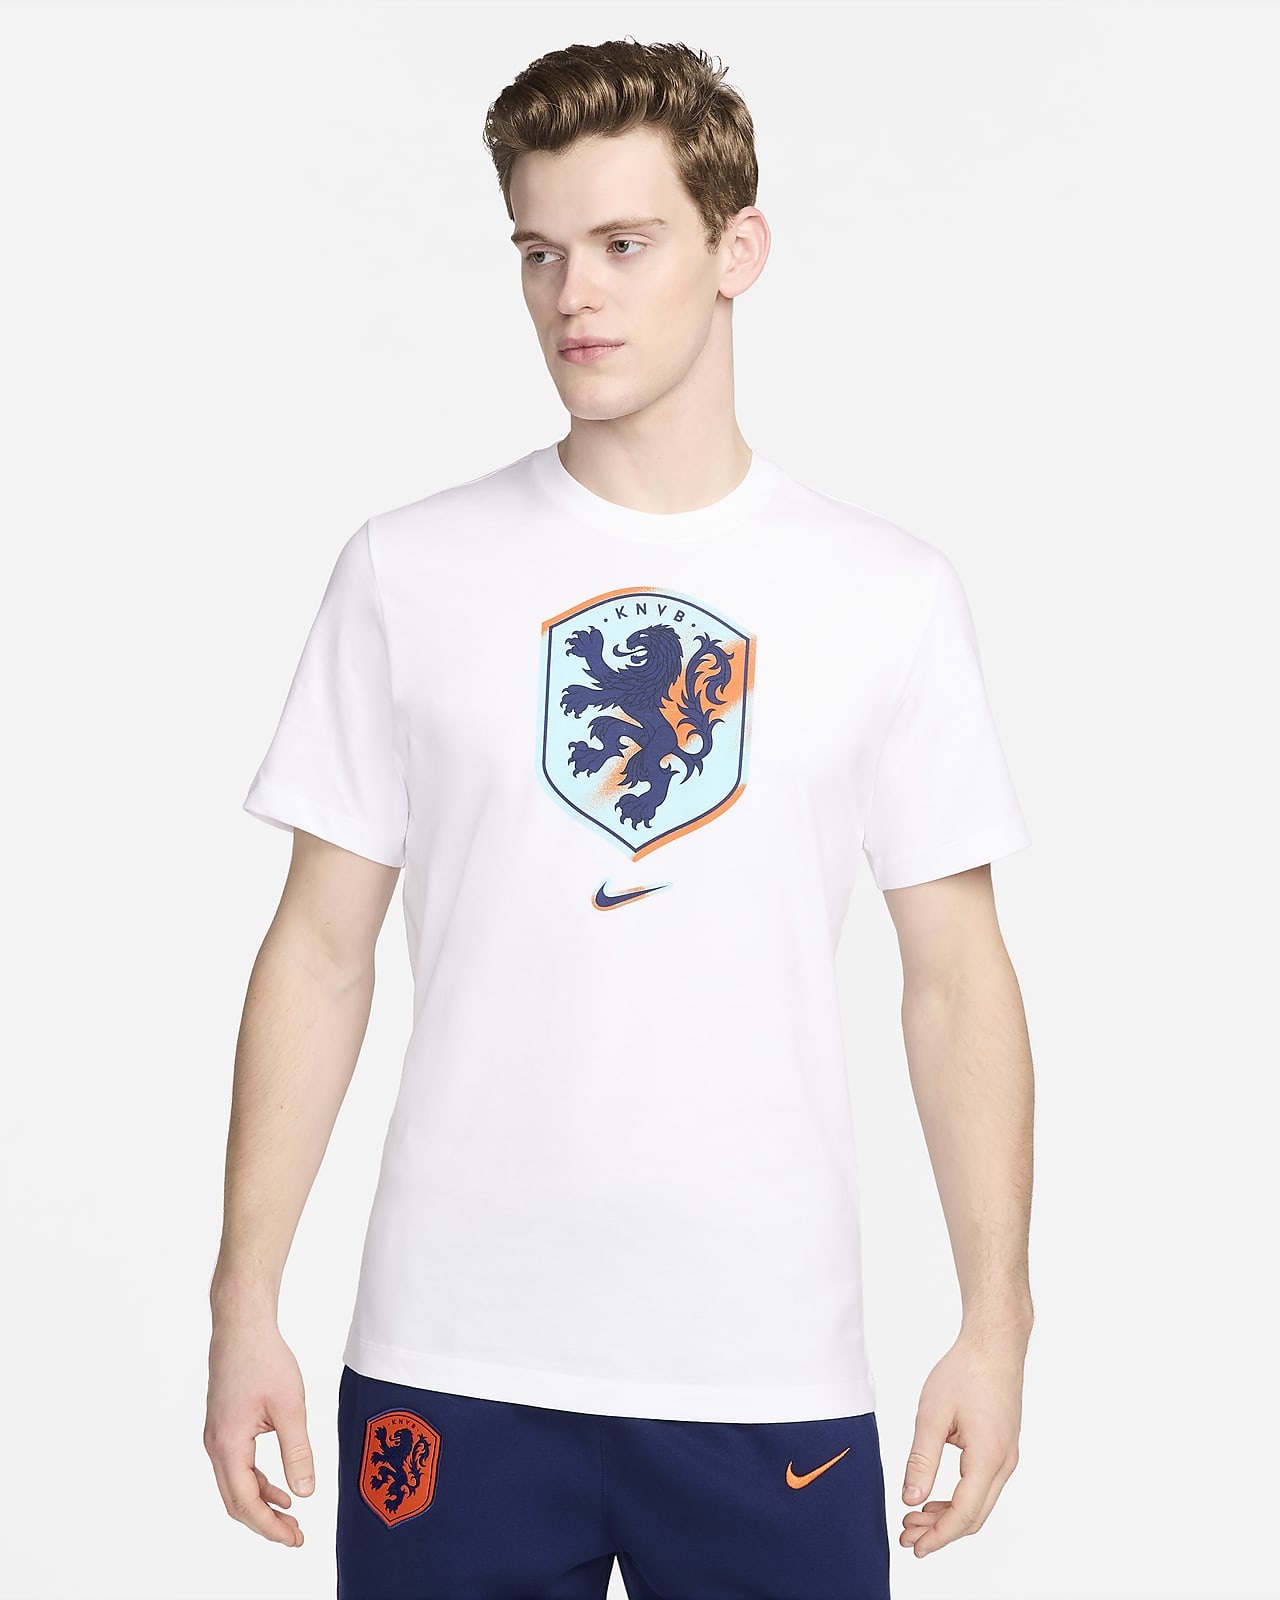 Netherlands Men's Nike Football T-Shirt